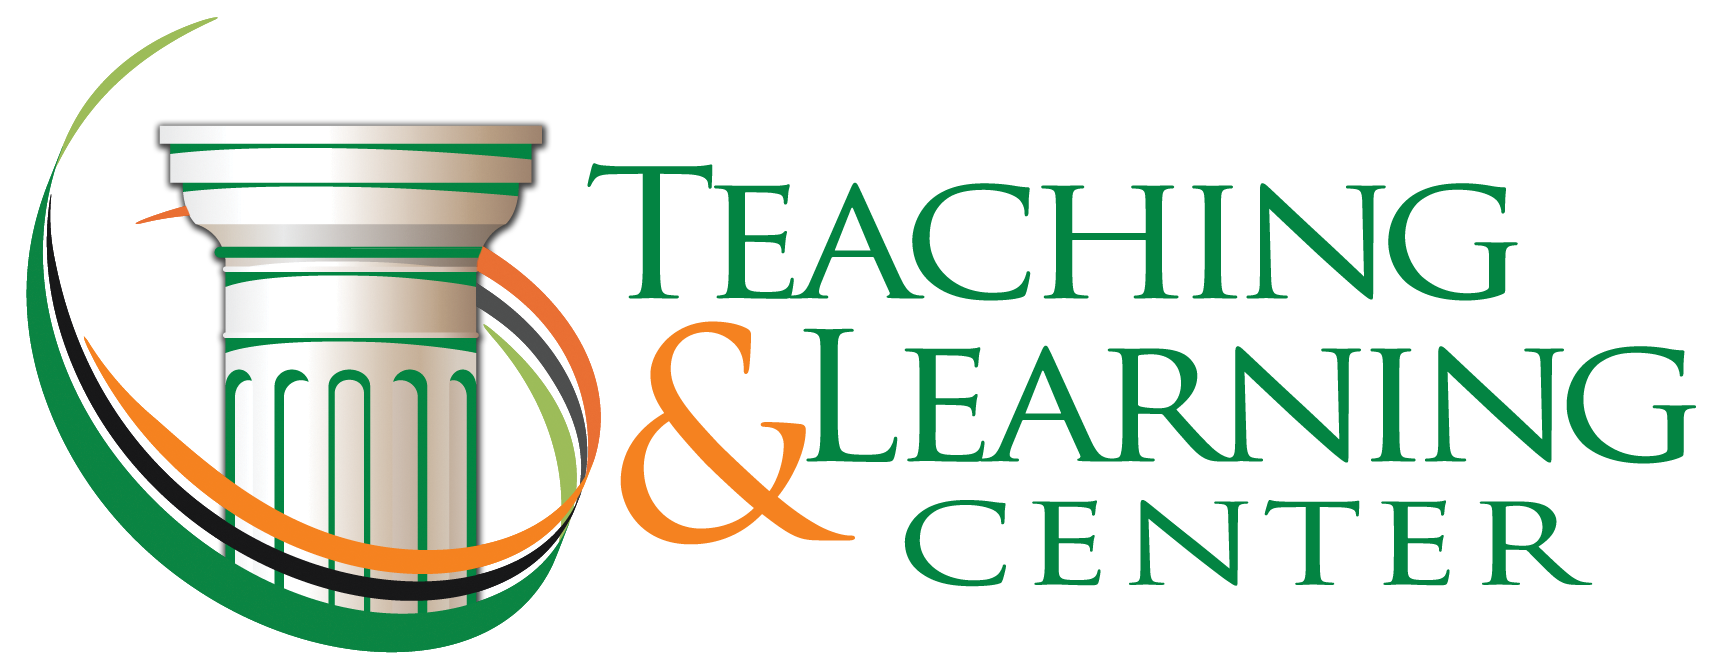 teach clipart teacher center